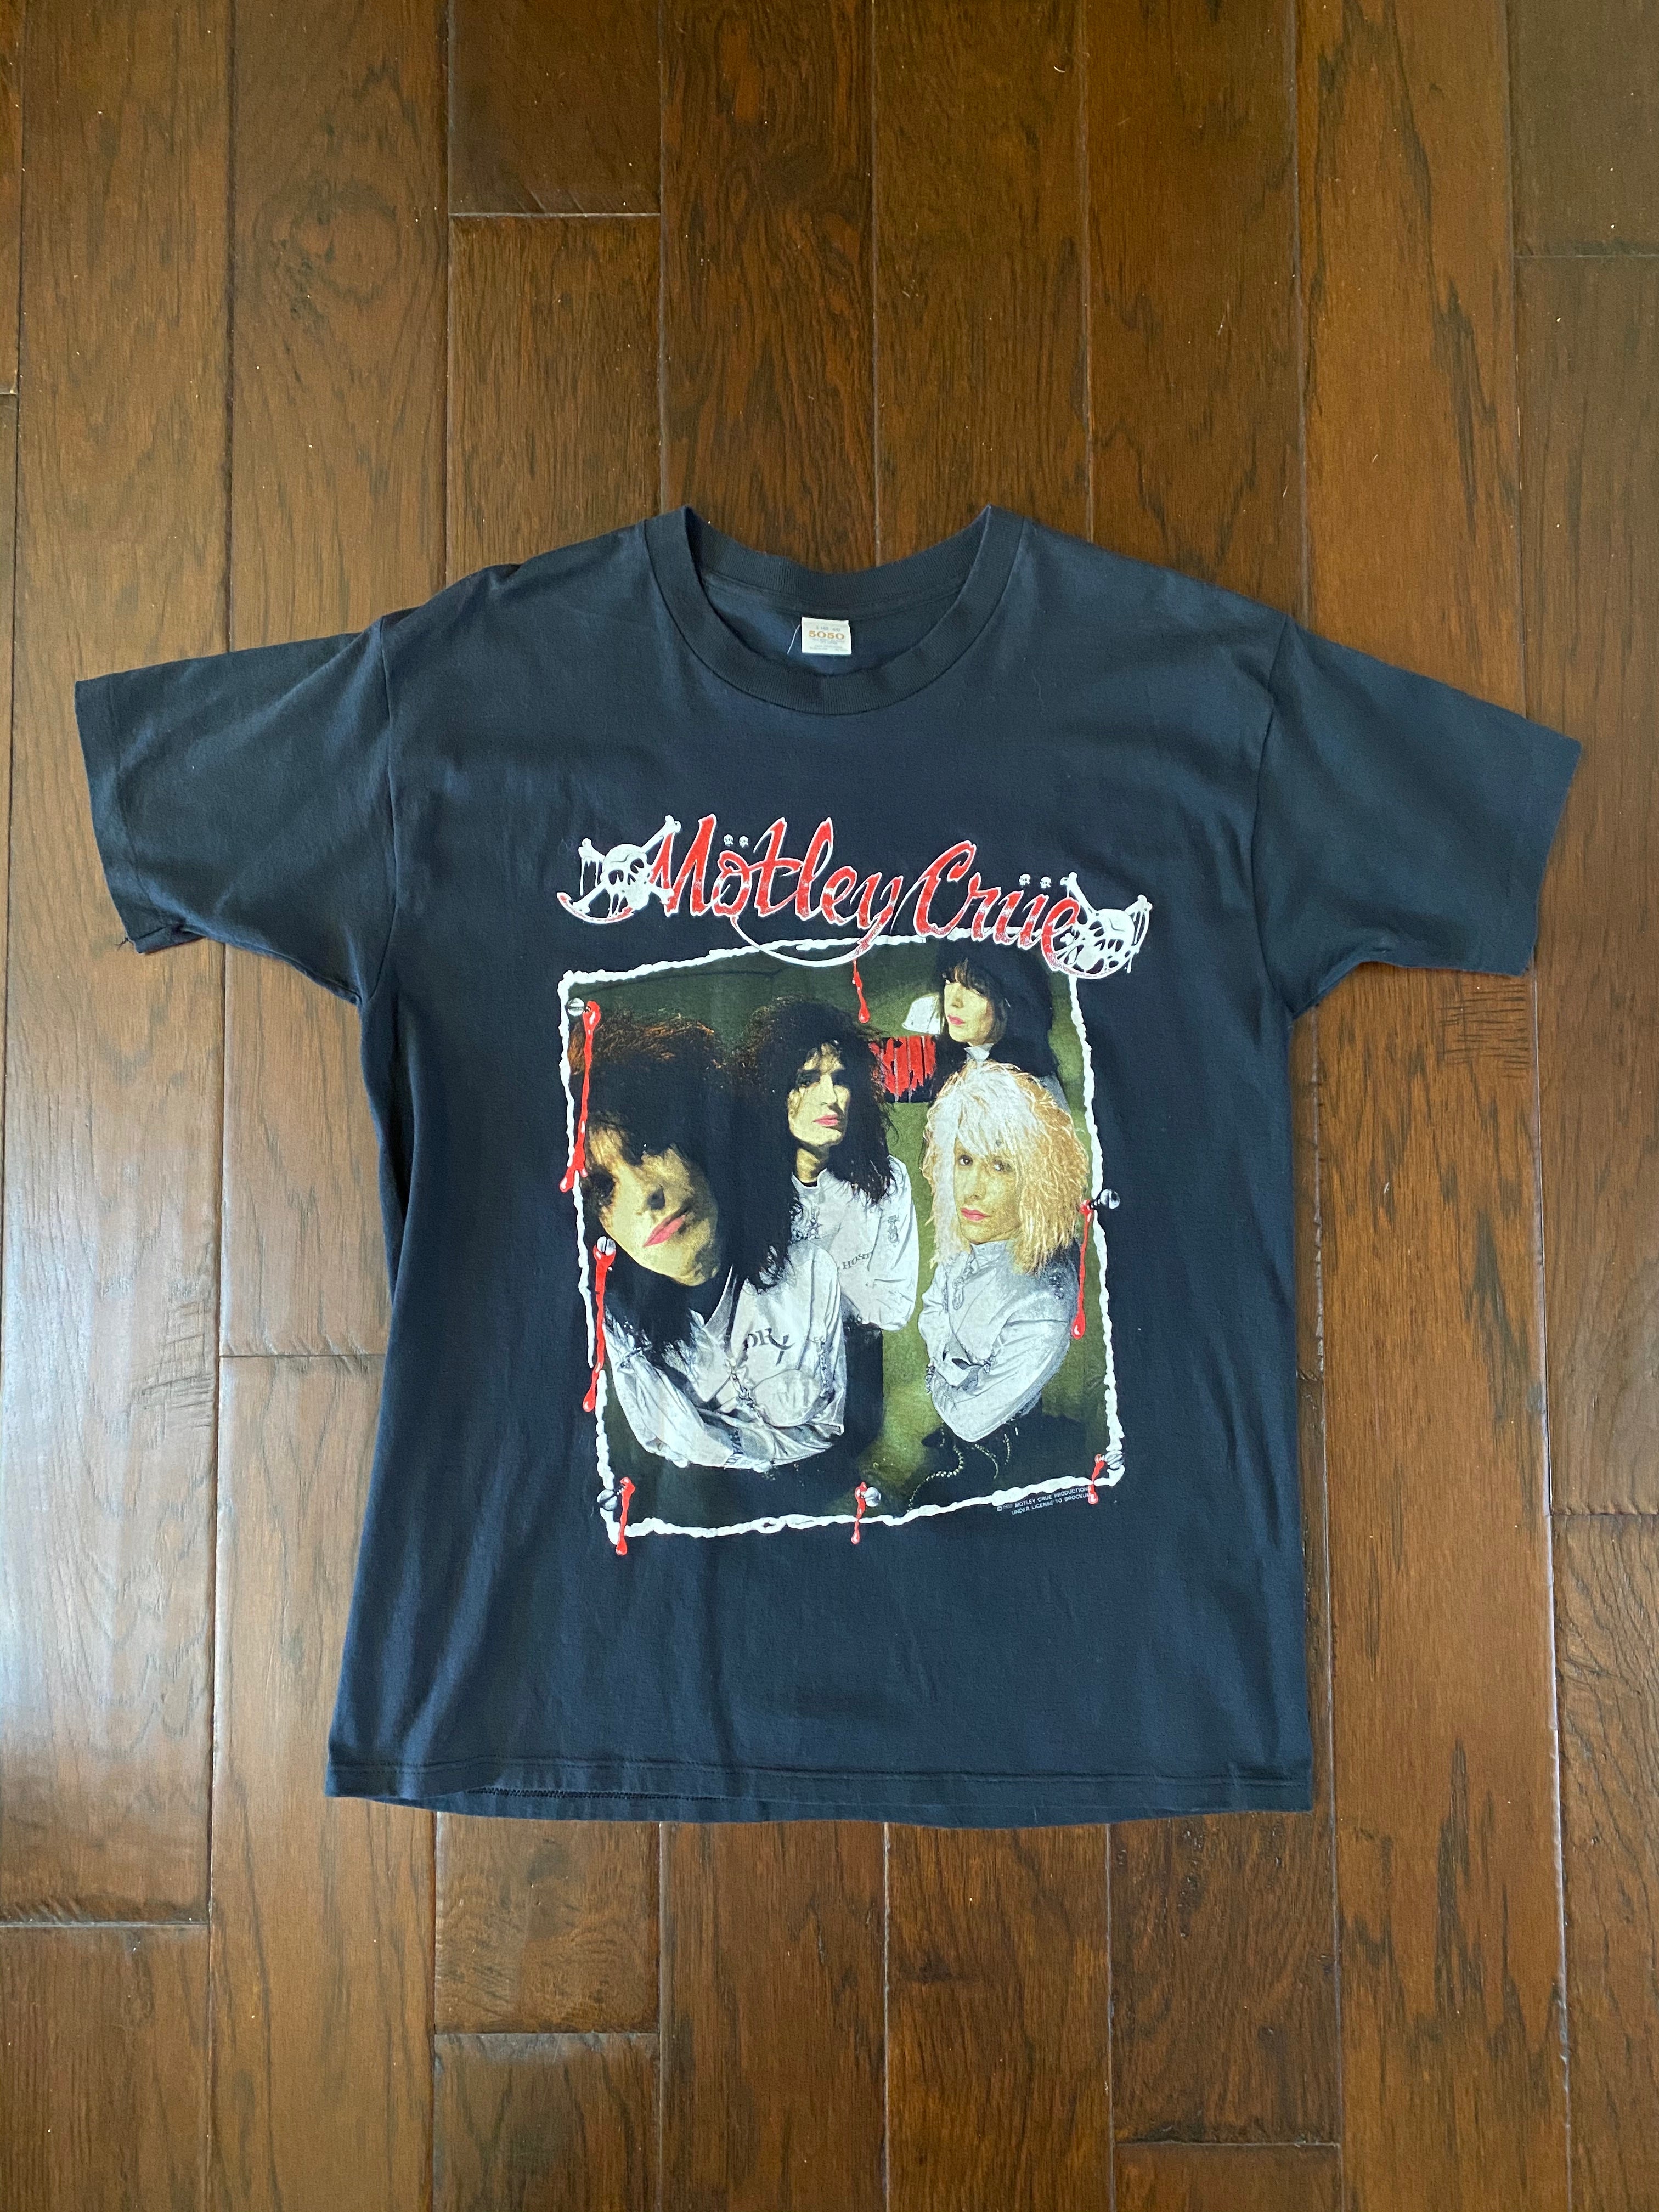 Motley Crue 1989 “Dr Feelgood” Vintage Tour T-shirt – The Vintage